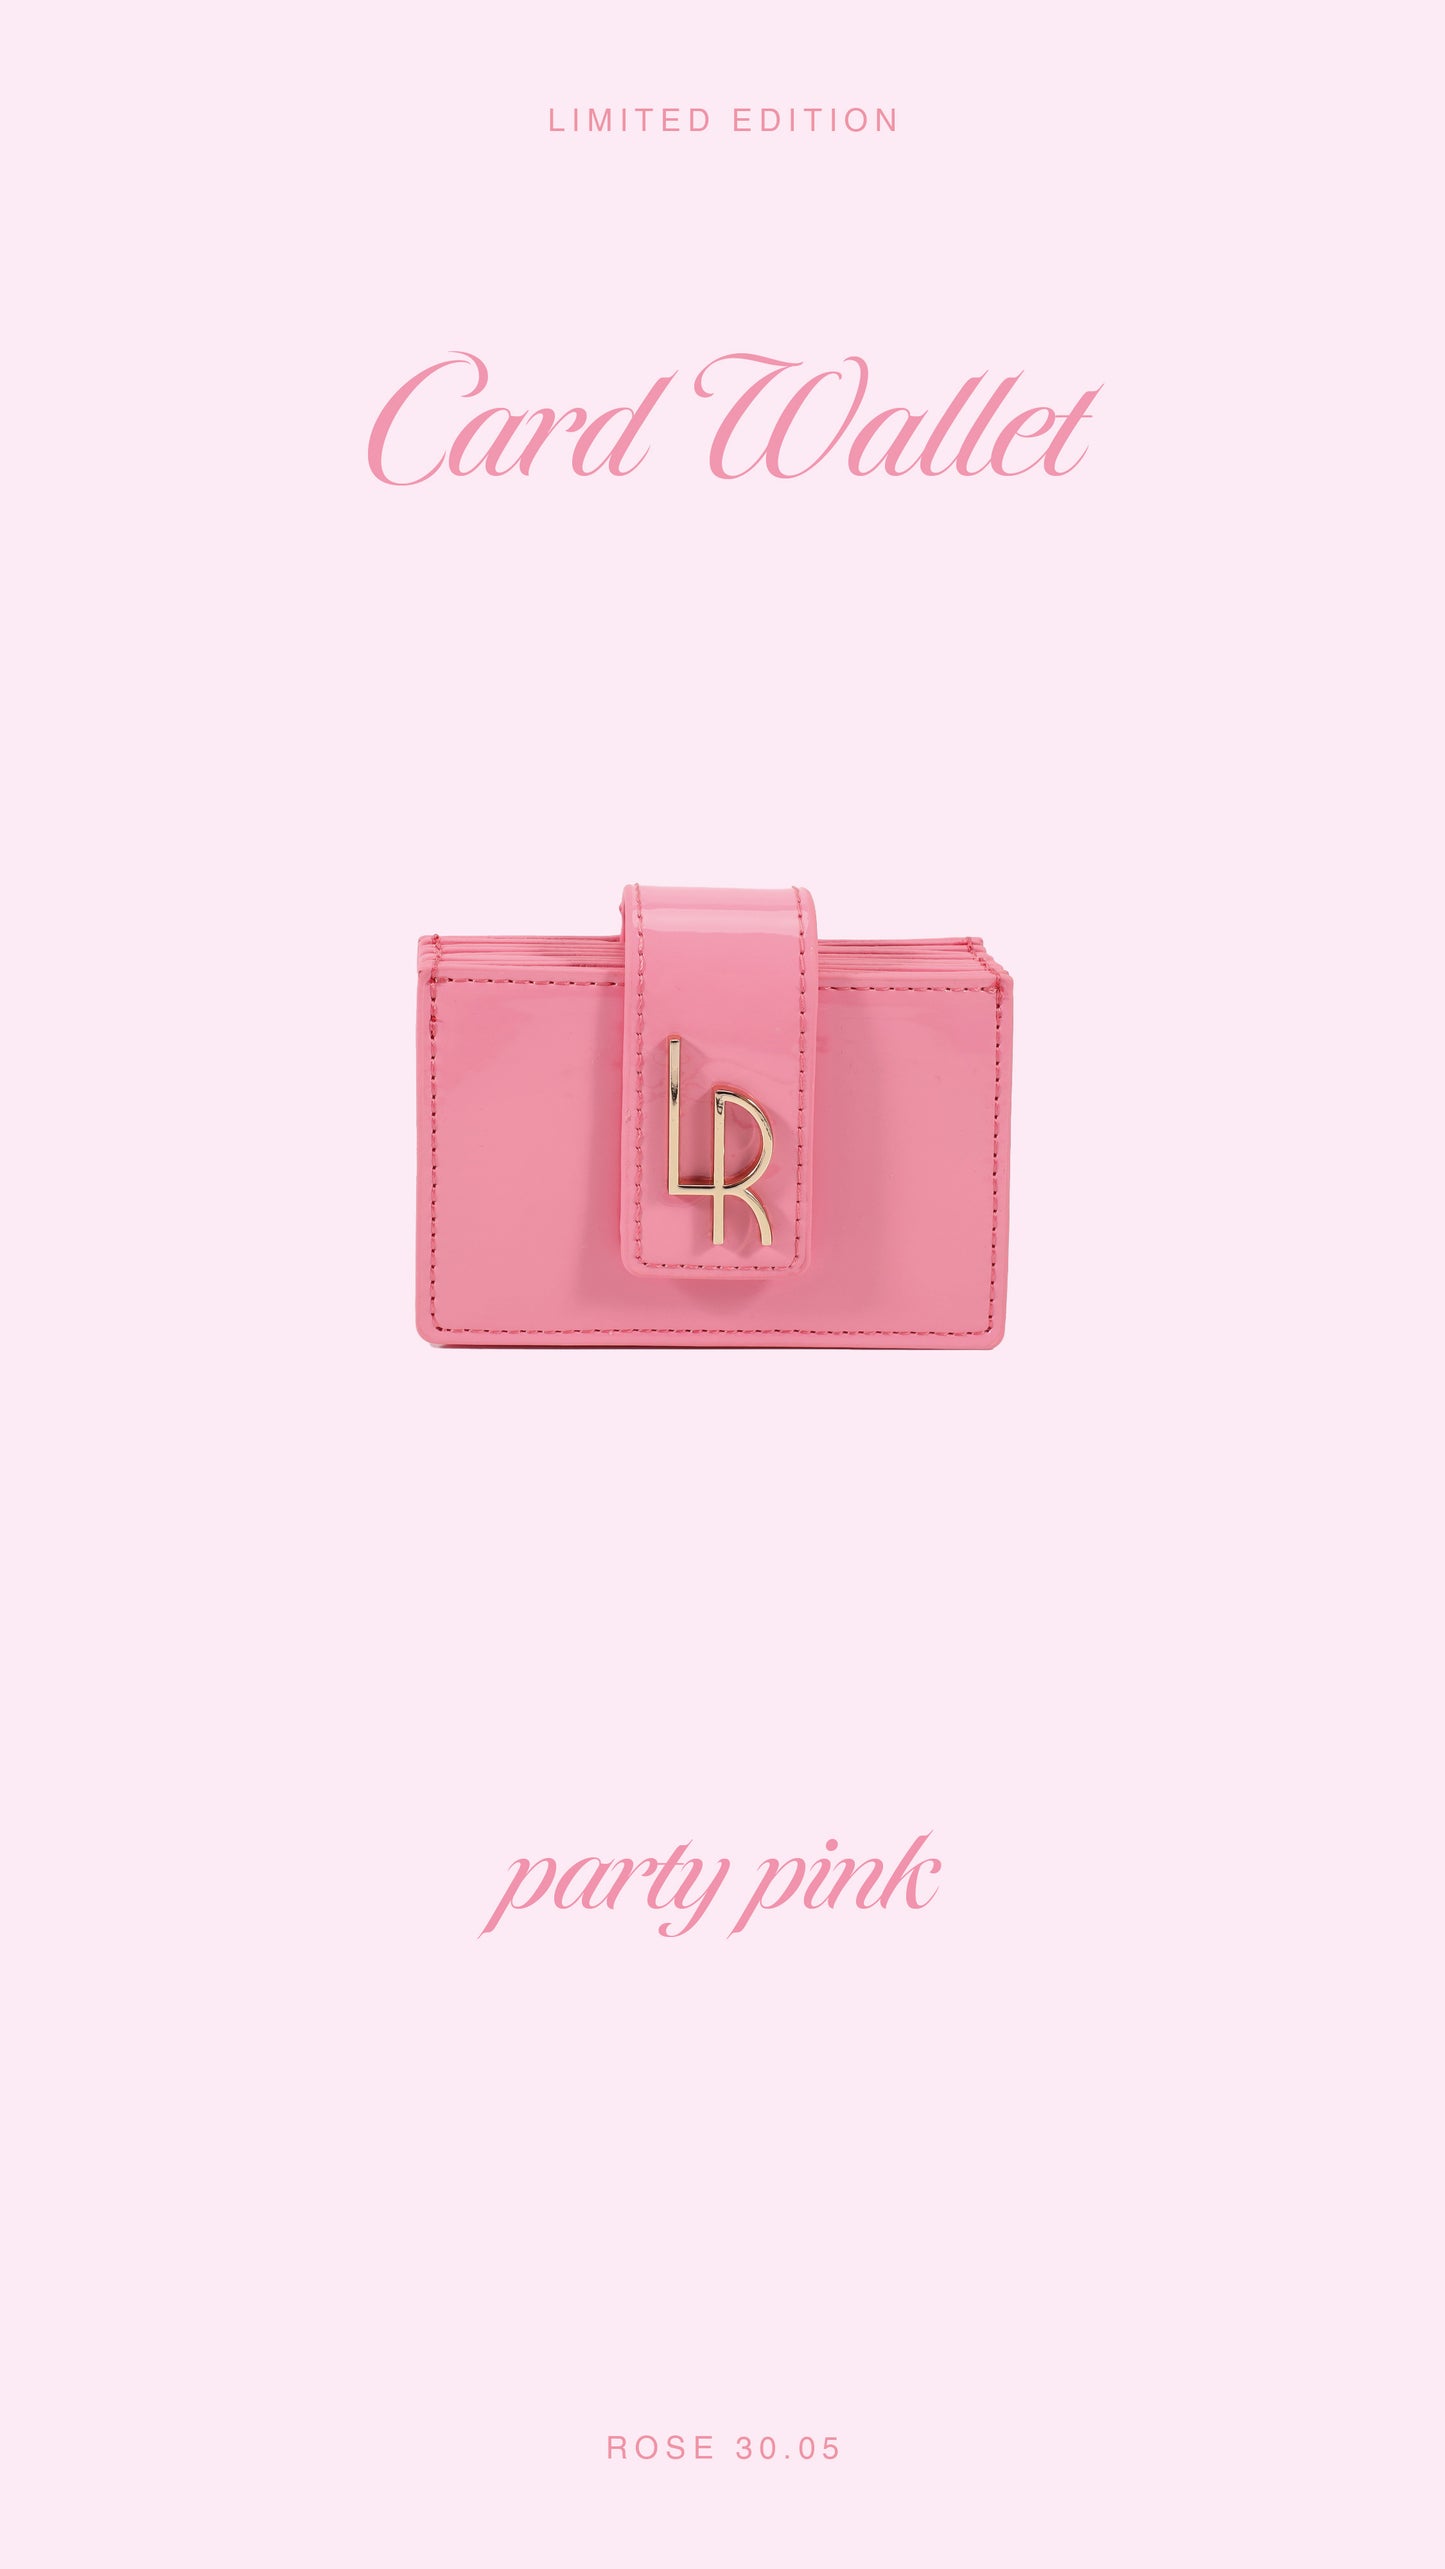 Portacarte ROSE CARD WALLET 30.05 LE - PARTY PINK